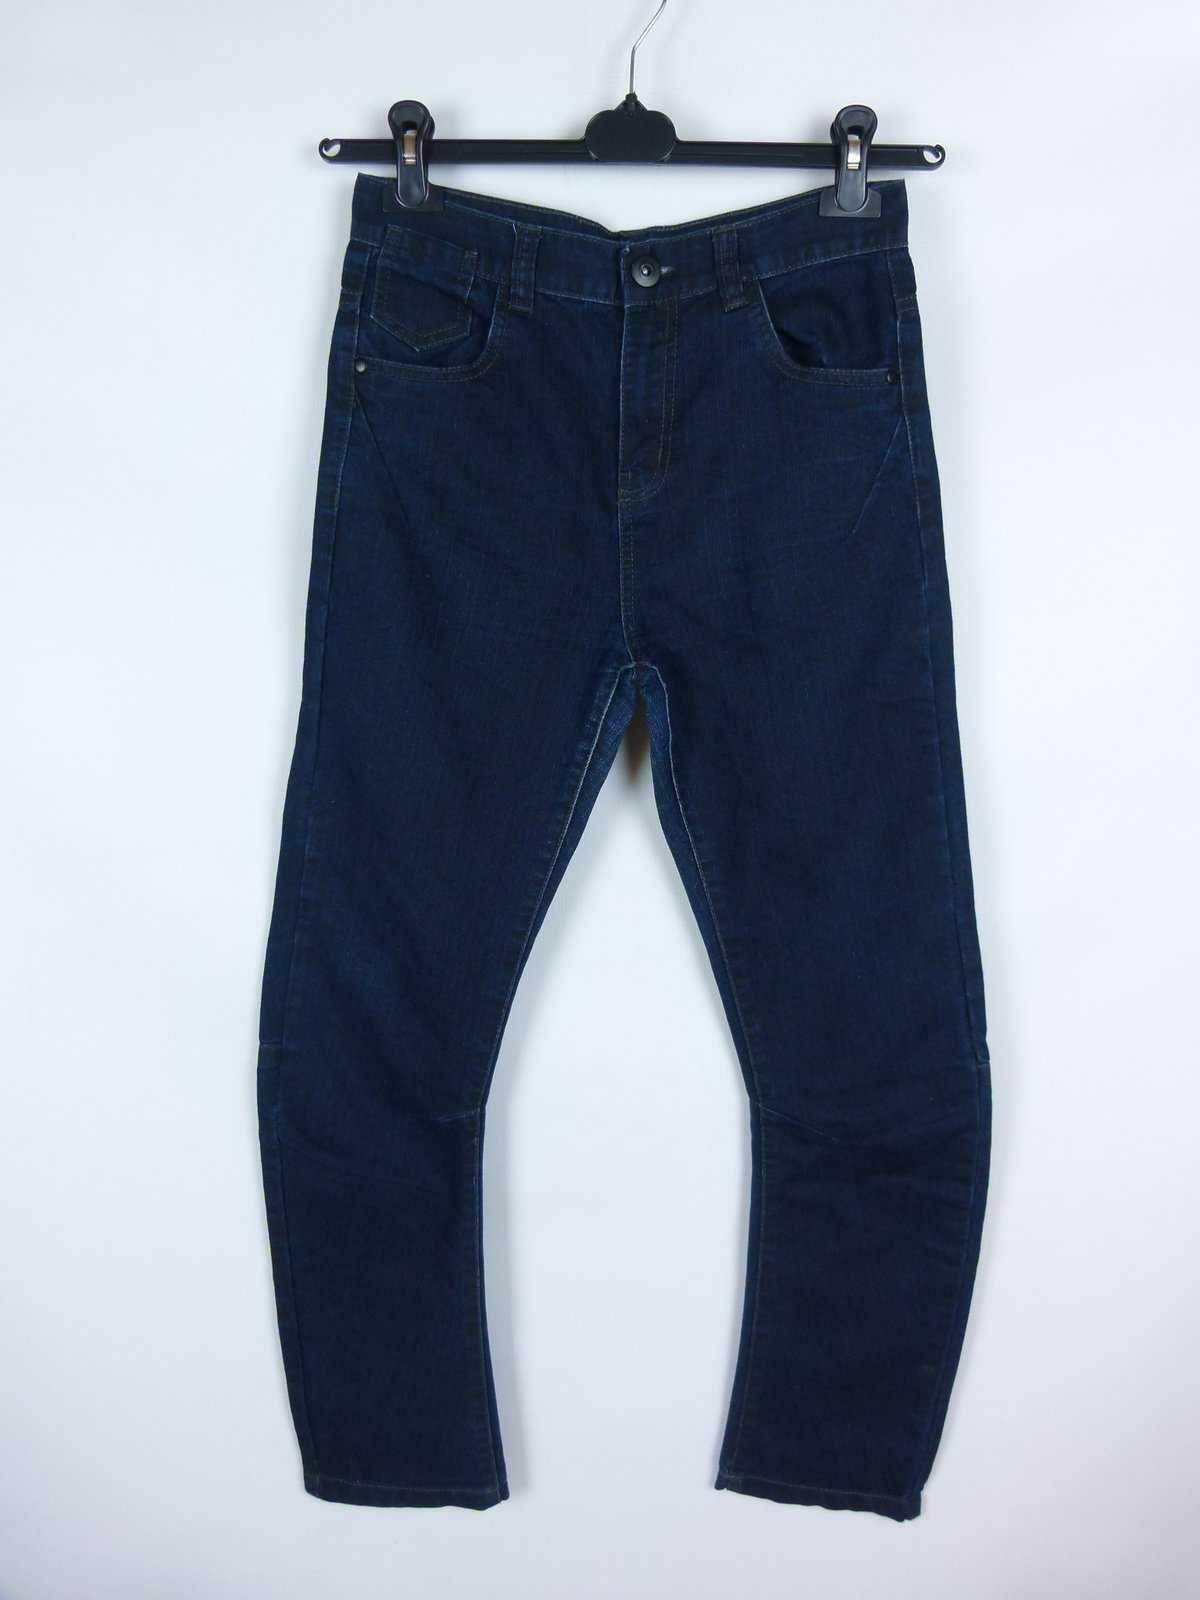 Denim Arc Leg spodnie jeans 12 - 13 lat / 158